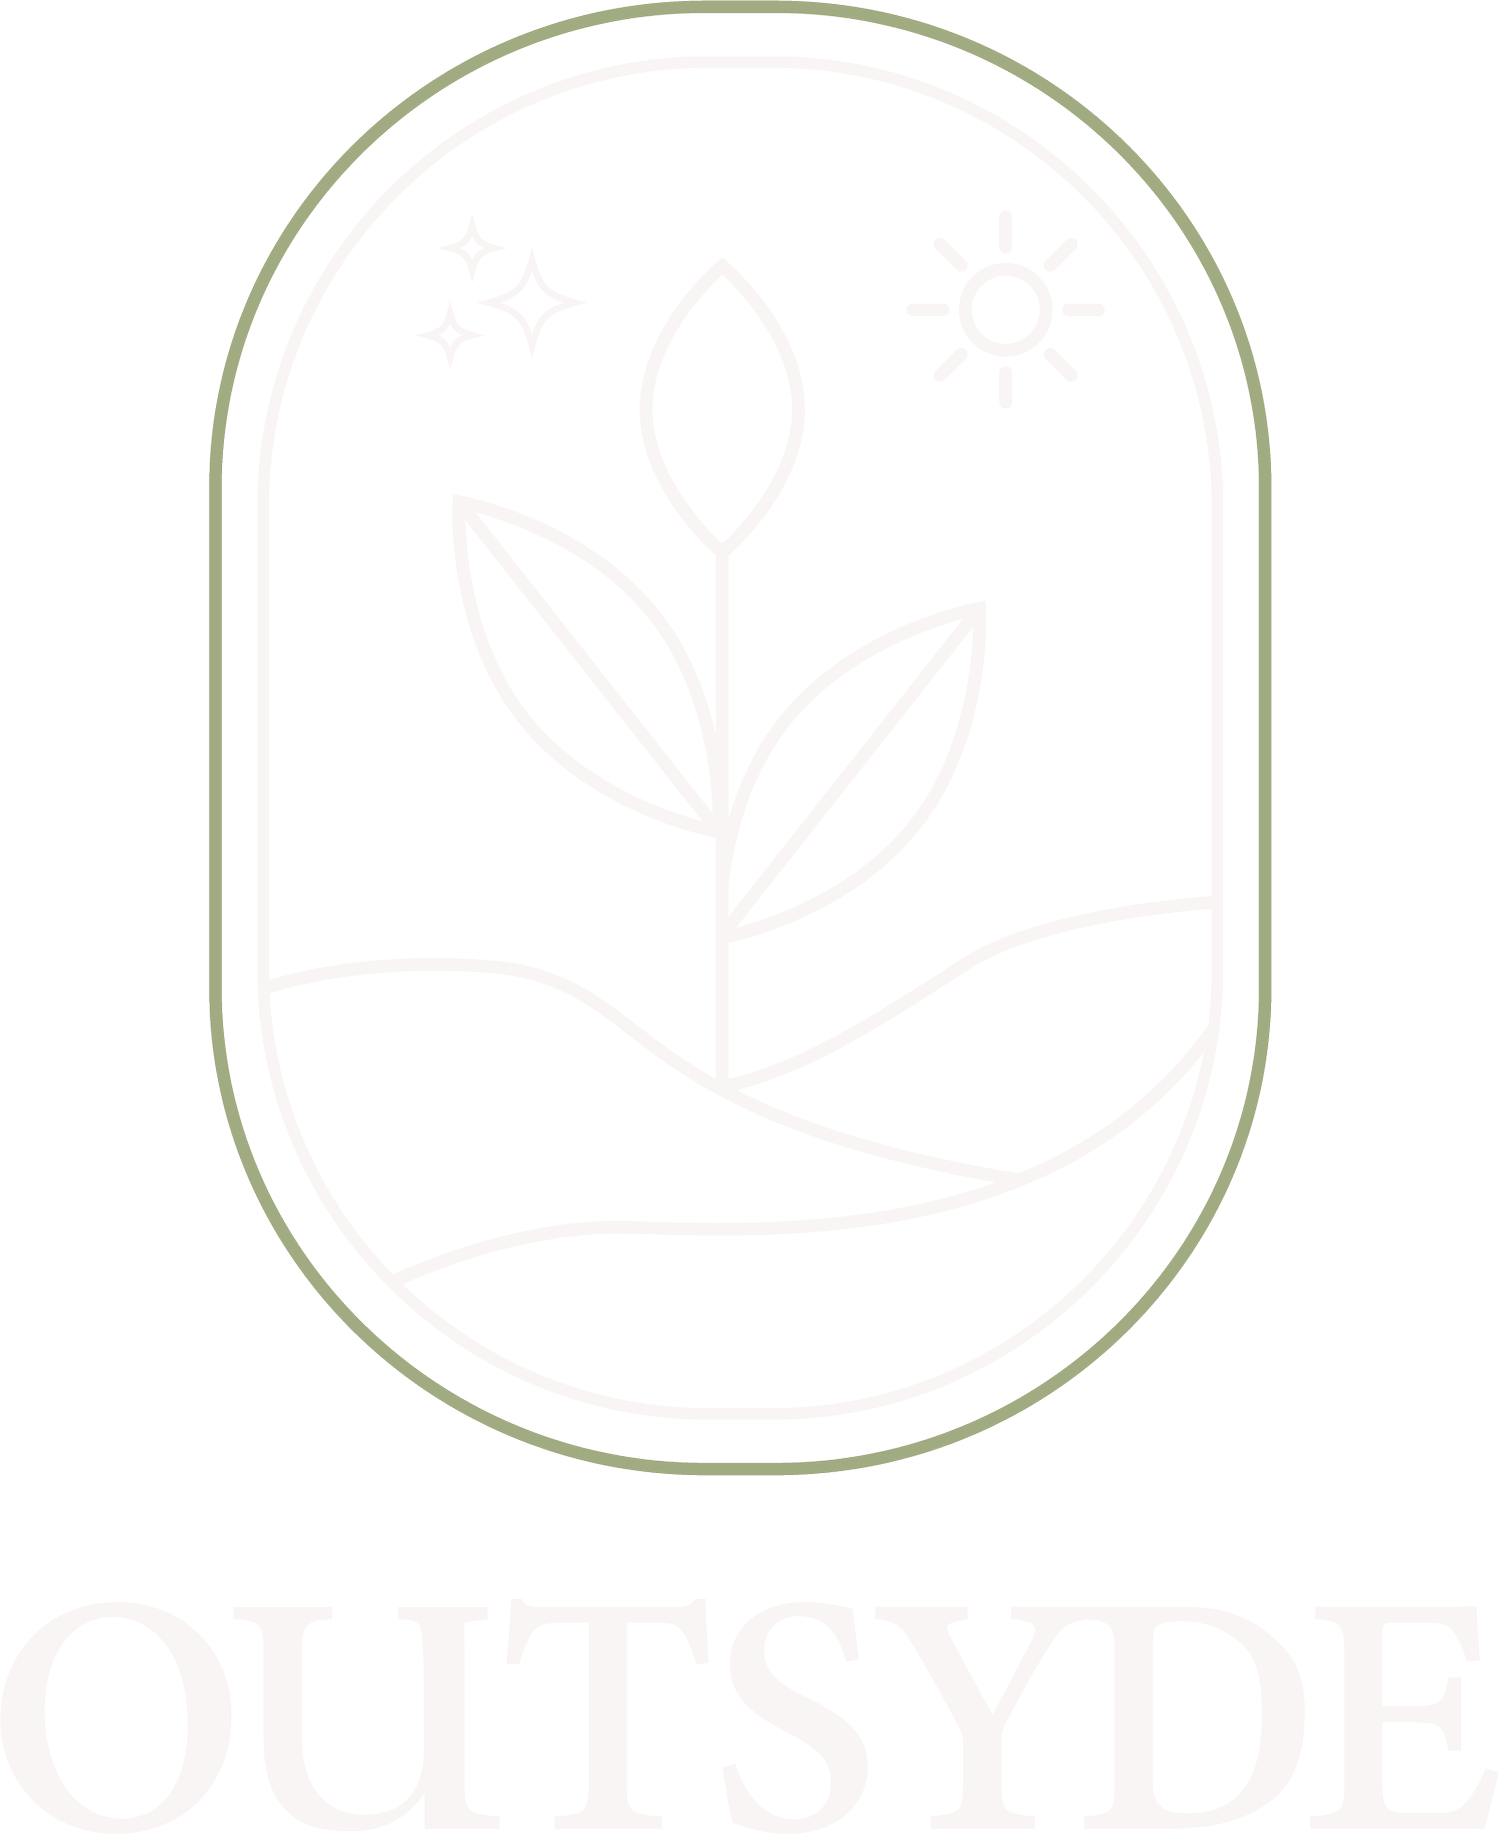 Outsyde, Inc.